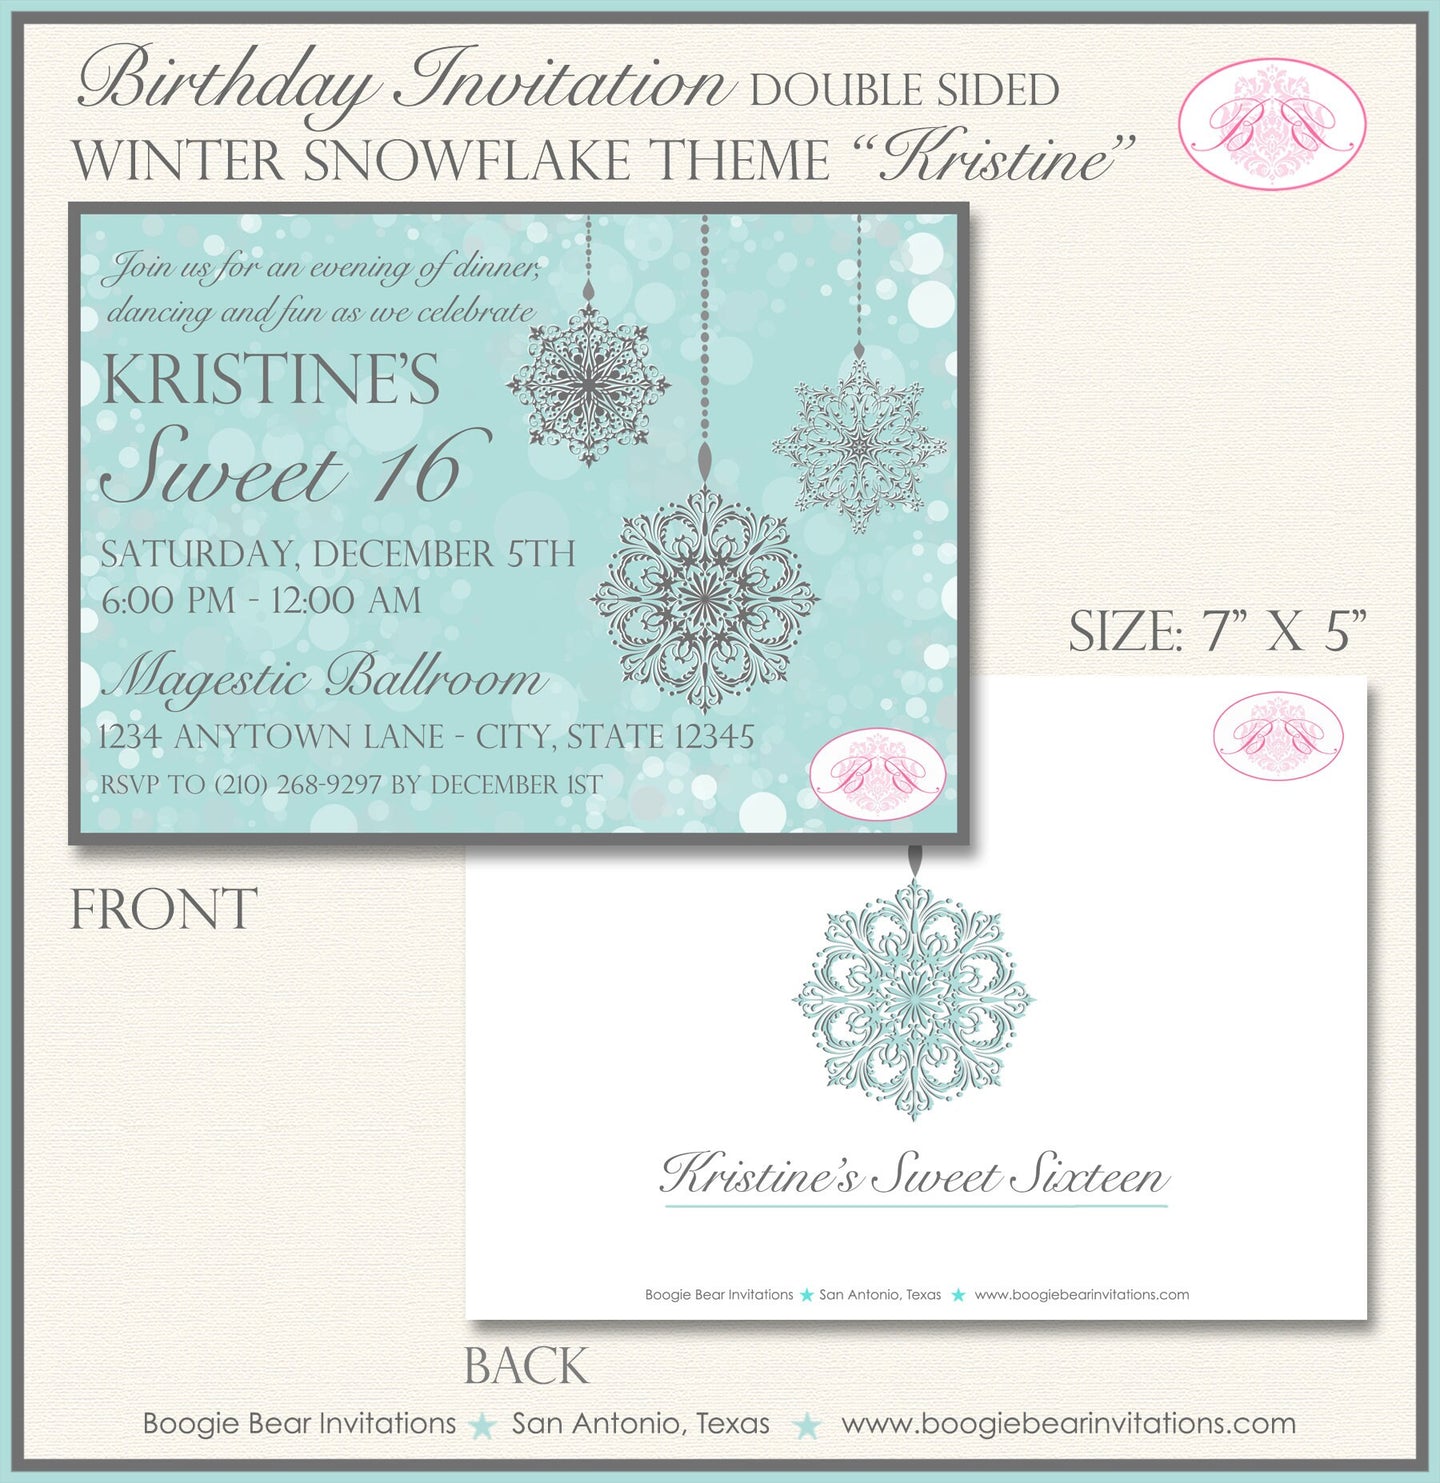 Winter SnowflakeParty Invitation Birthday Ornament Bokeh Blue Silver Snow Boogie Bear Invitations Kristine Theme Paperless Printable Printed